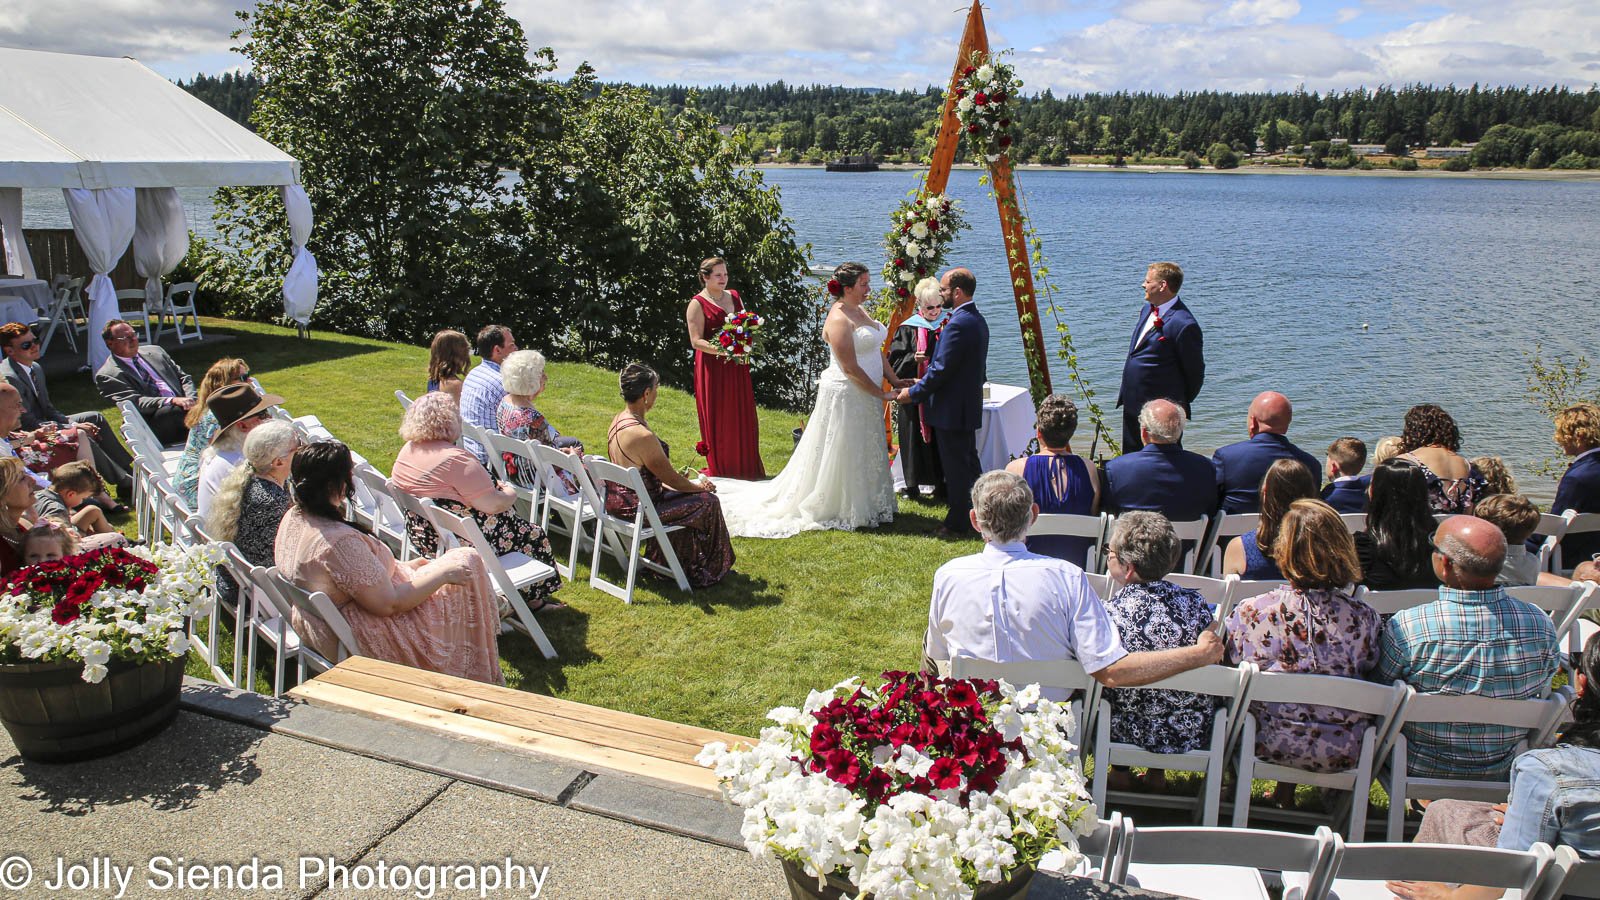 Kitsap county waterfront weddings by Jolly Sienda Photography an